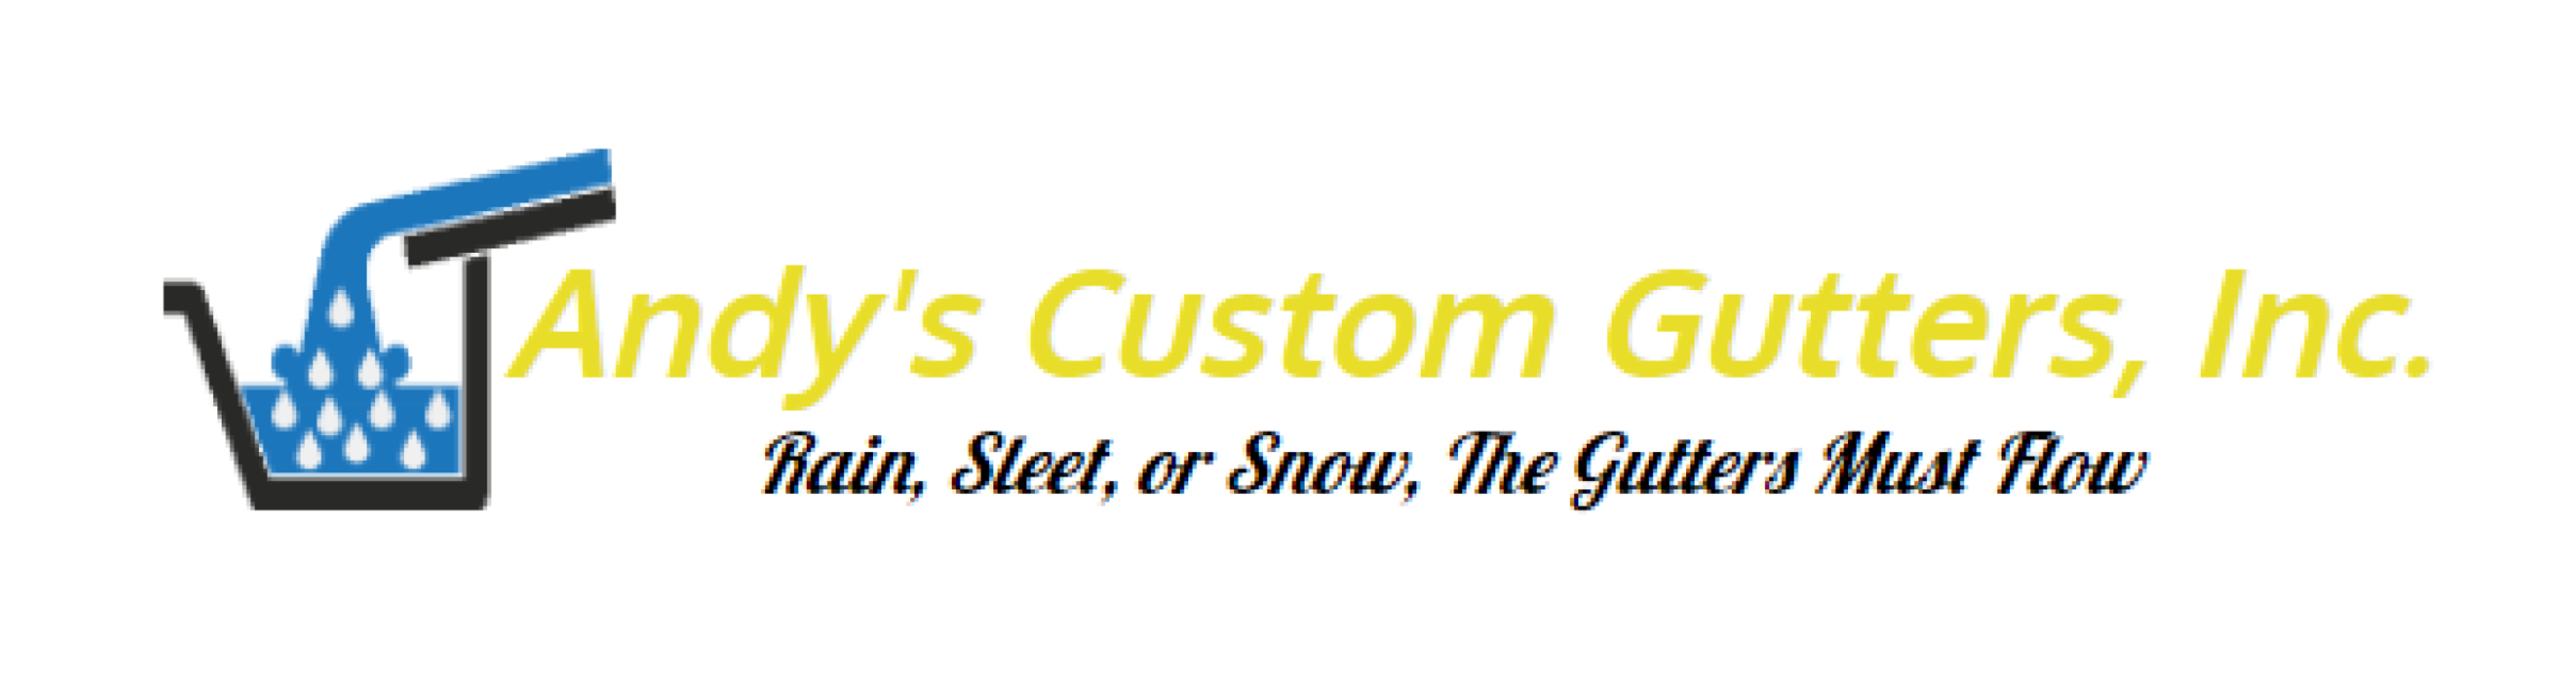 Andy's Custom Gutters, Inc. Logo